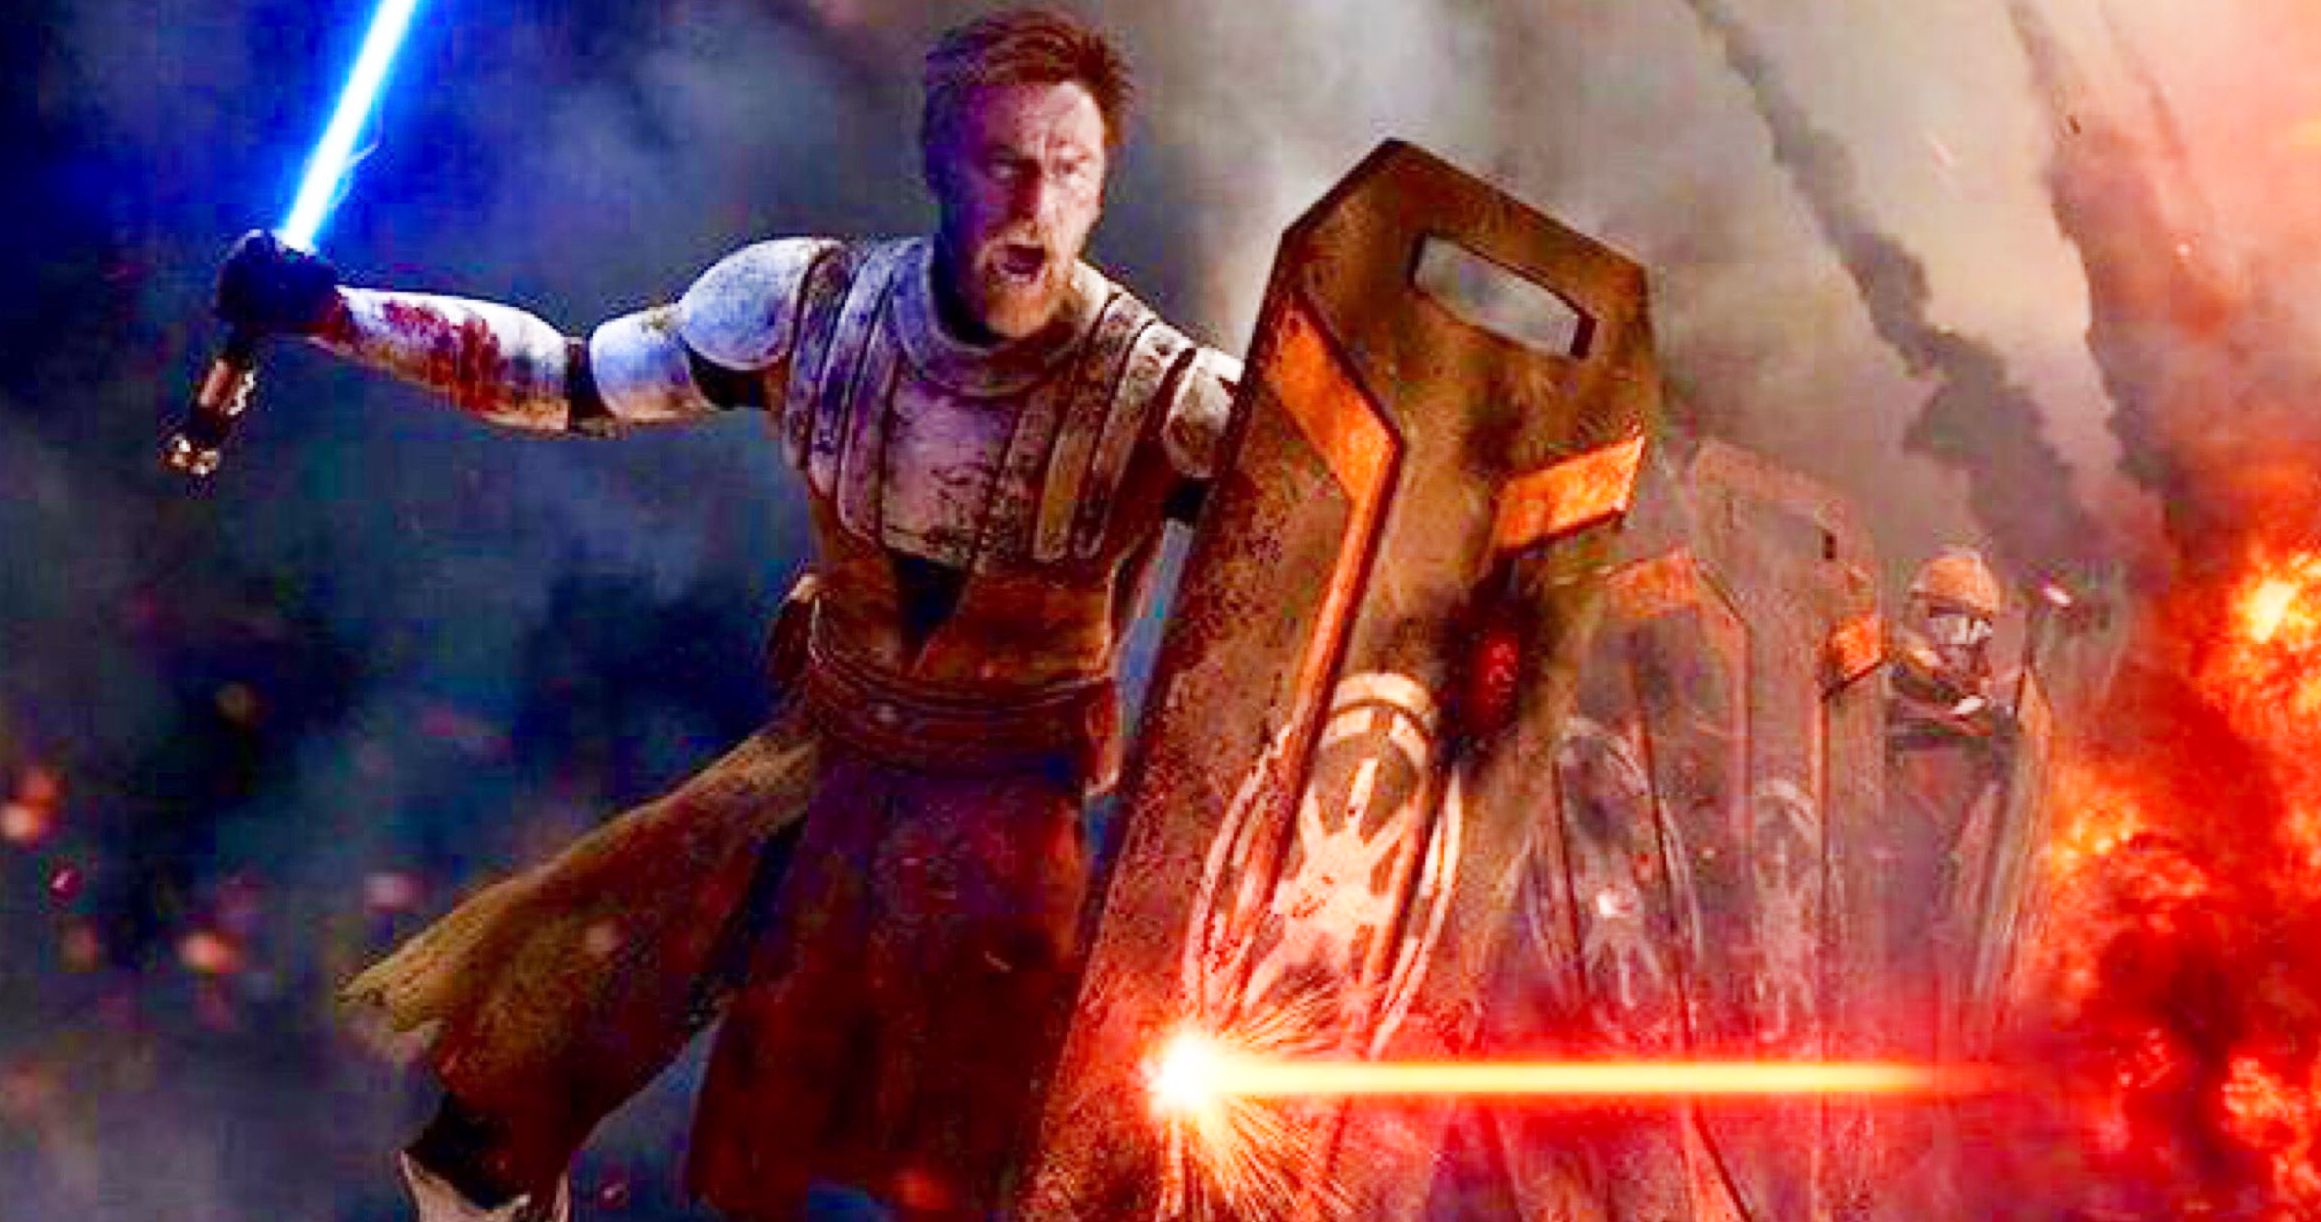 Does Obi-Wan Kenobi Disney+ Miniseries Partially Take Place During The Clone Wars?